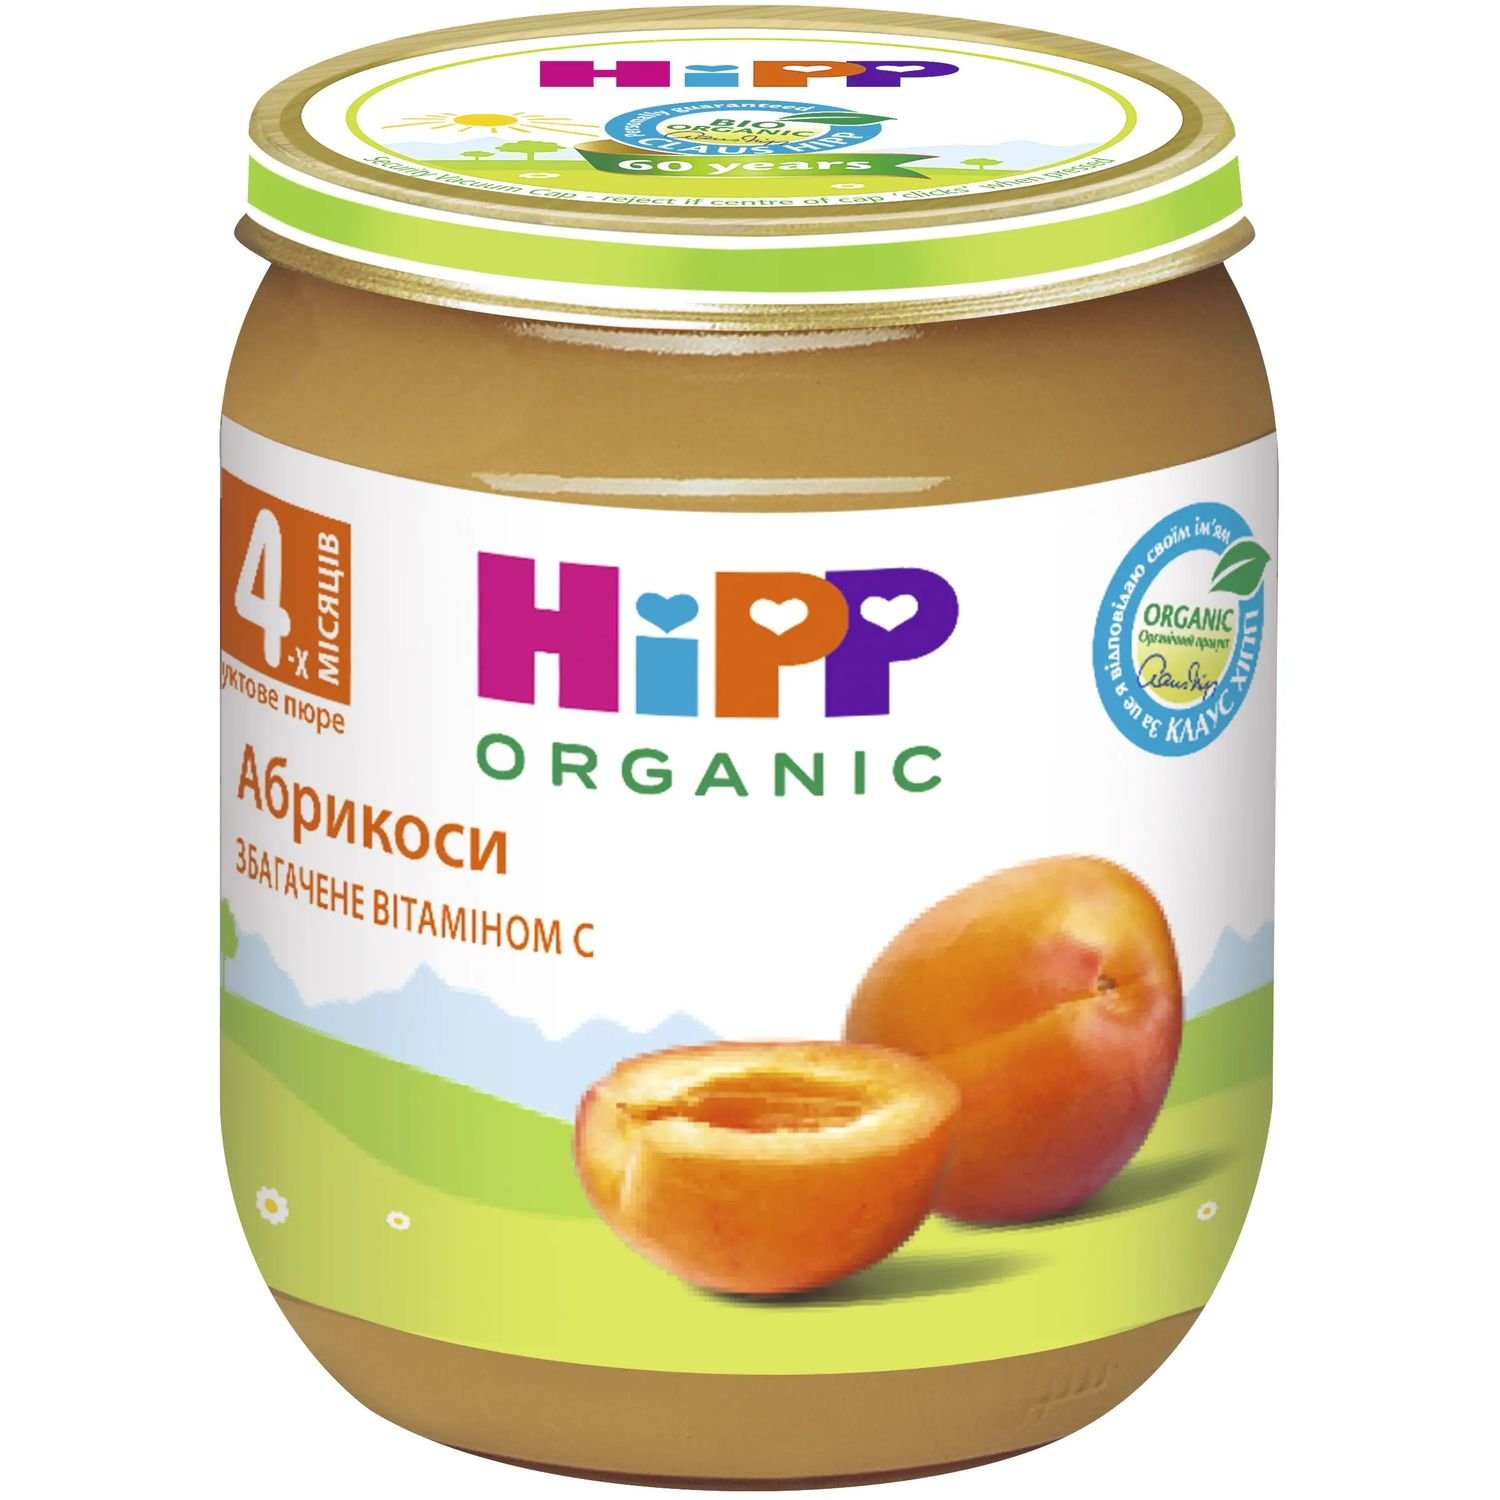 Органічне фруктове пюре HiPP Абрикоси 125 г - фото 1